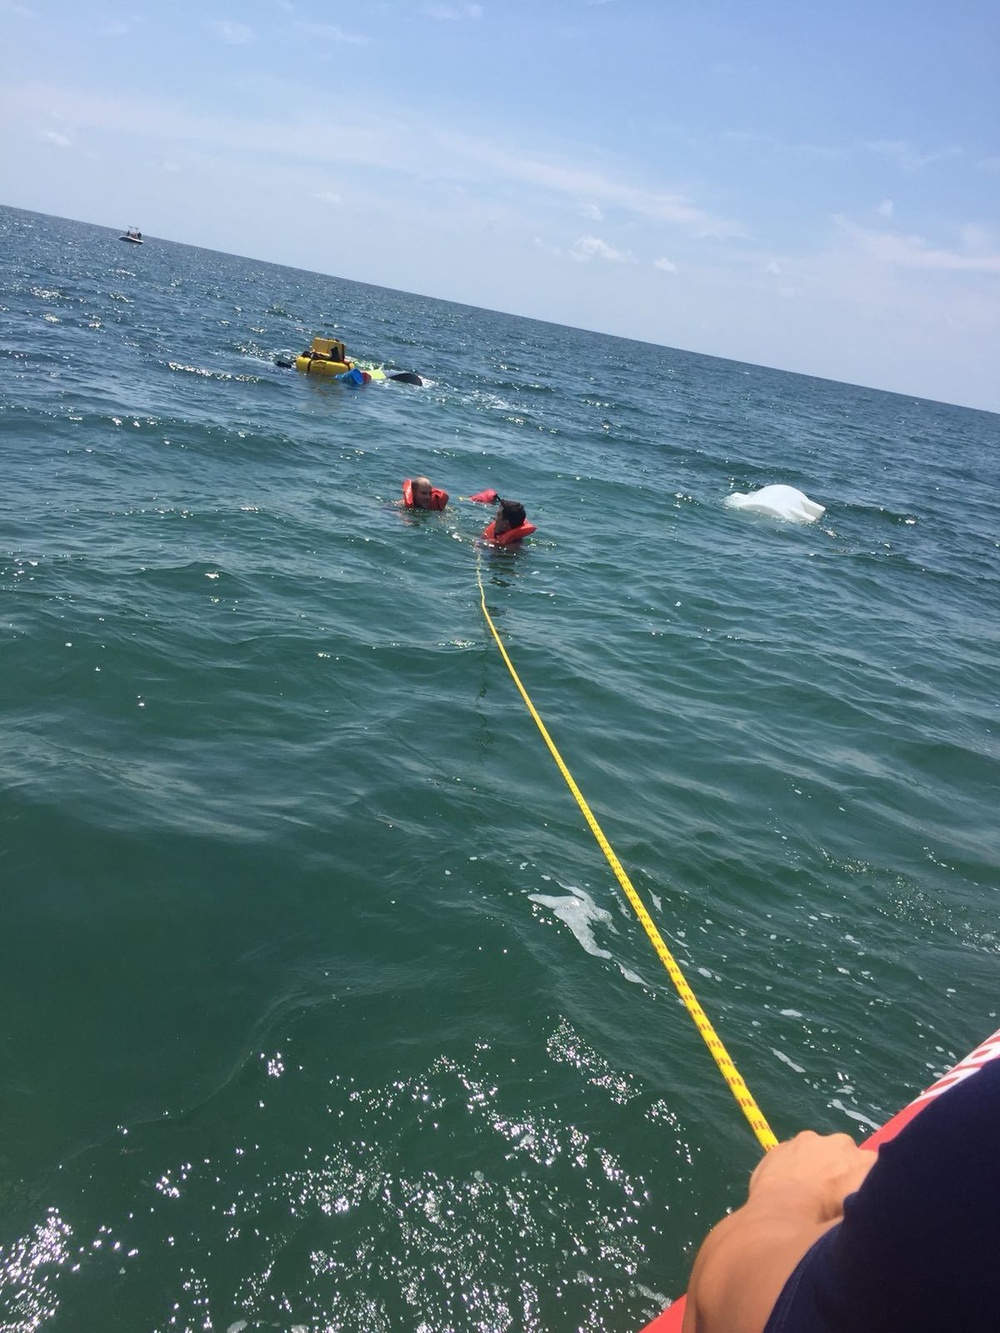 Coast Guard, good Samaritan rescue 2 from capsized vessel near Islamorada